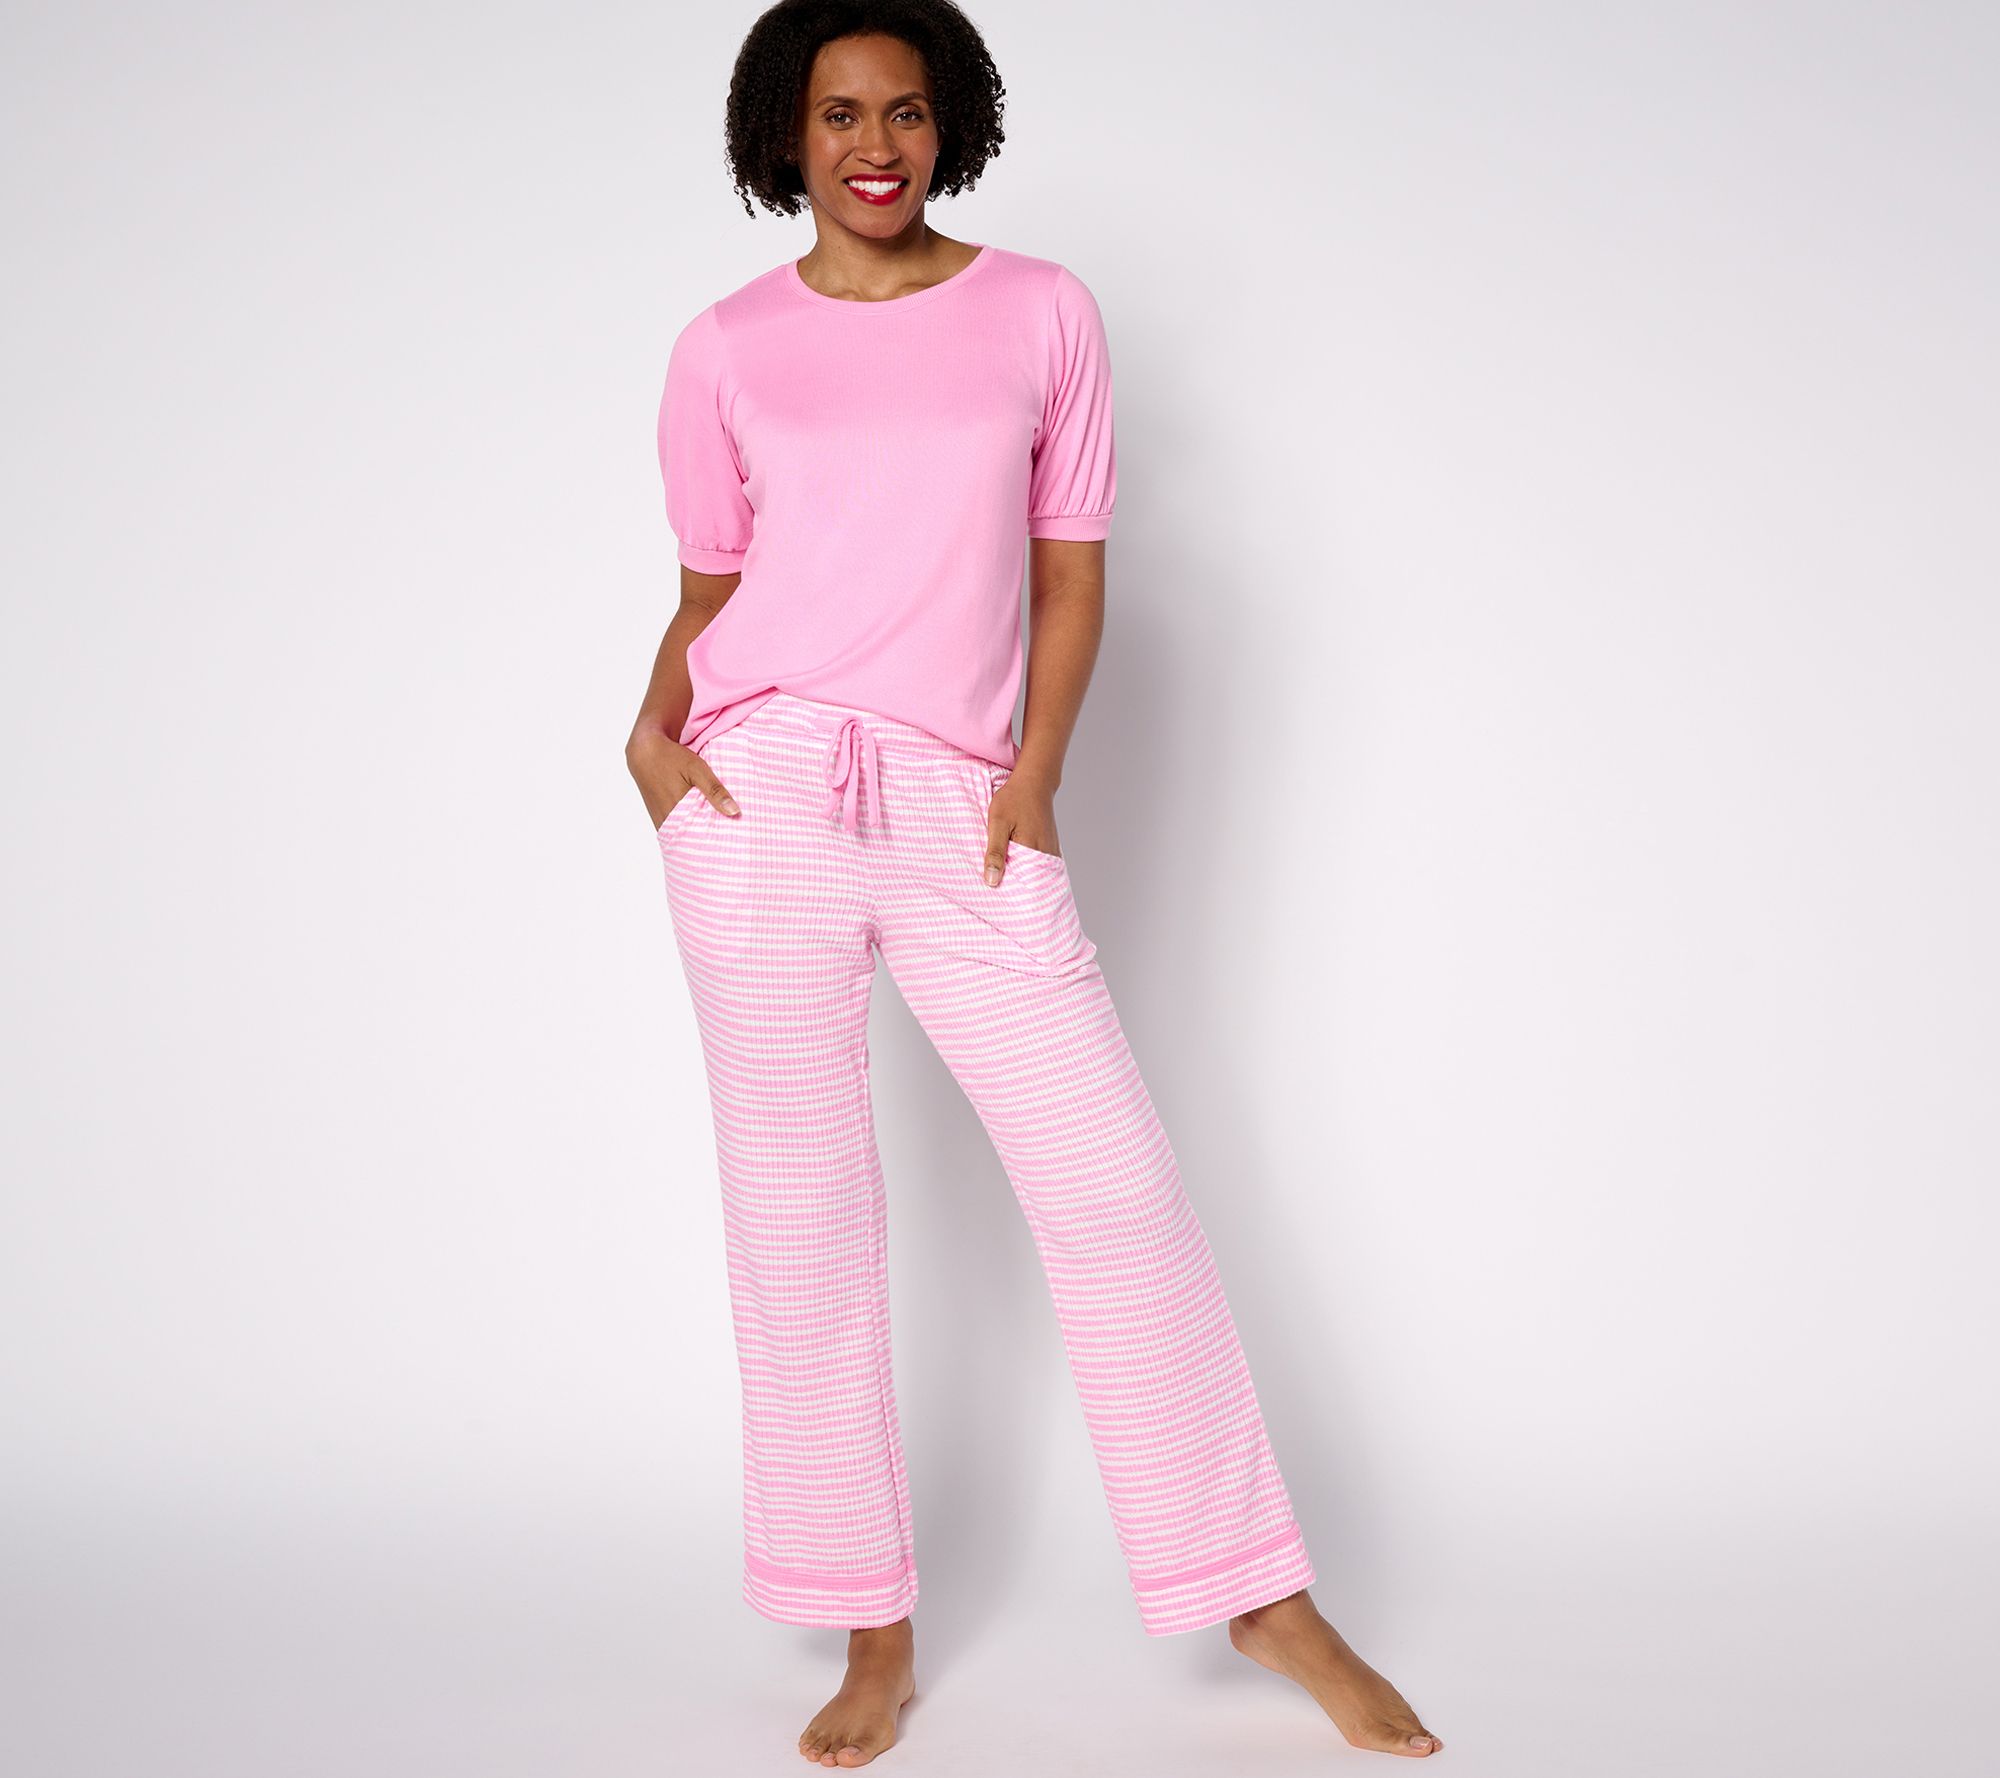 Adr Womens Short Sleeve Knit Pajamas Set Cats On Lavender 2x Large